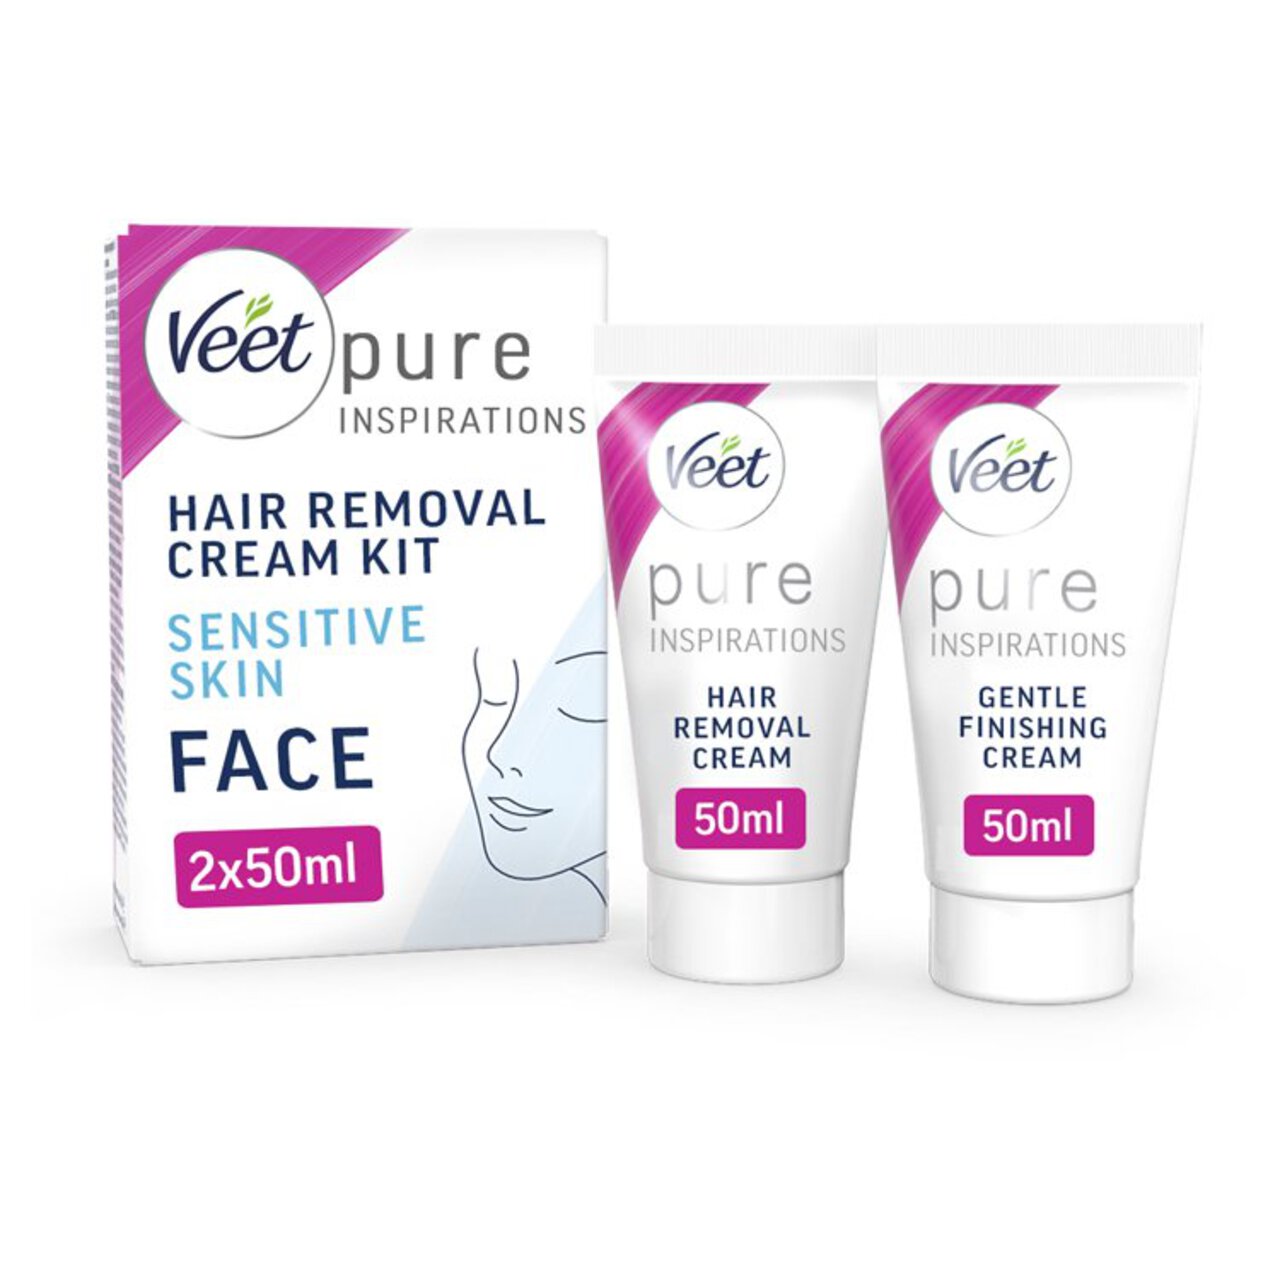 Veet Pure Hair Removal Kit Face Sensitive Skin 2 x 50ml